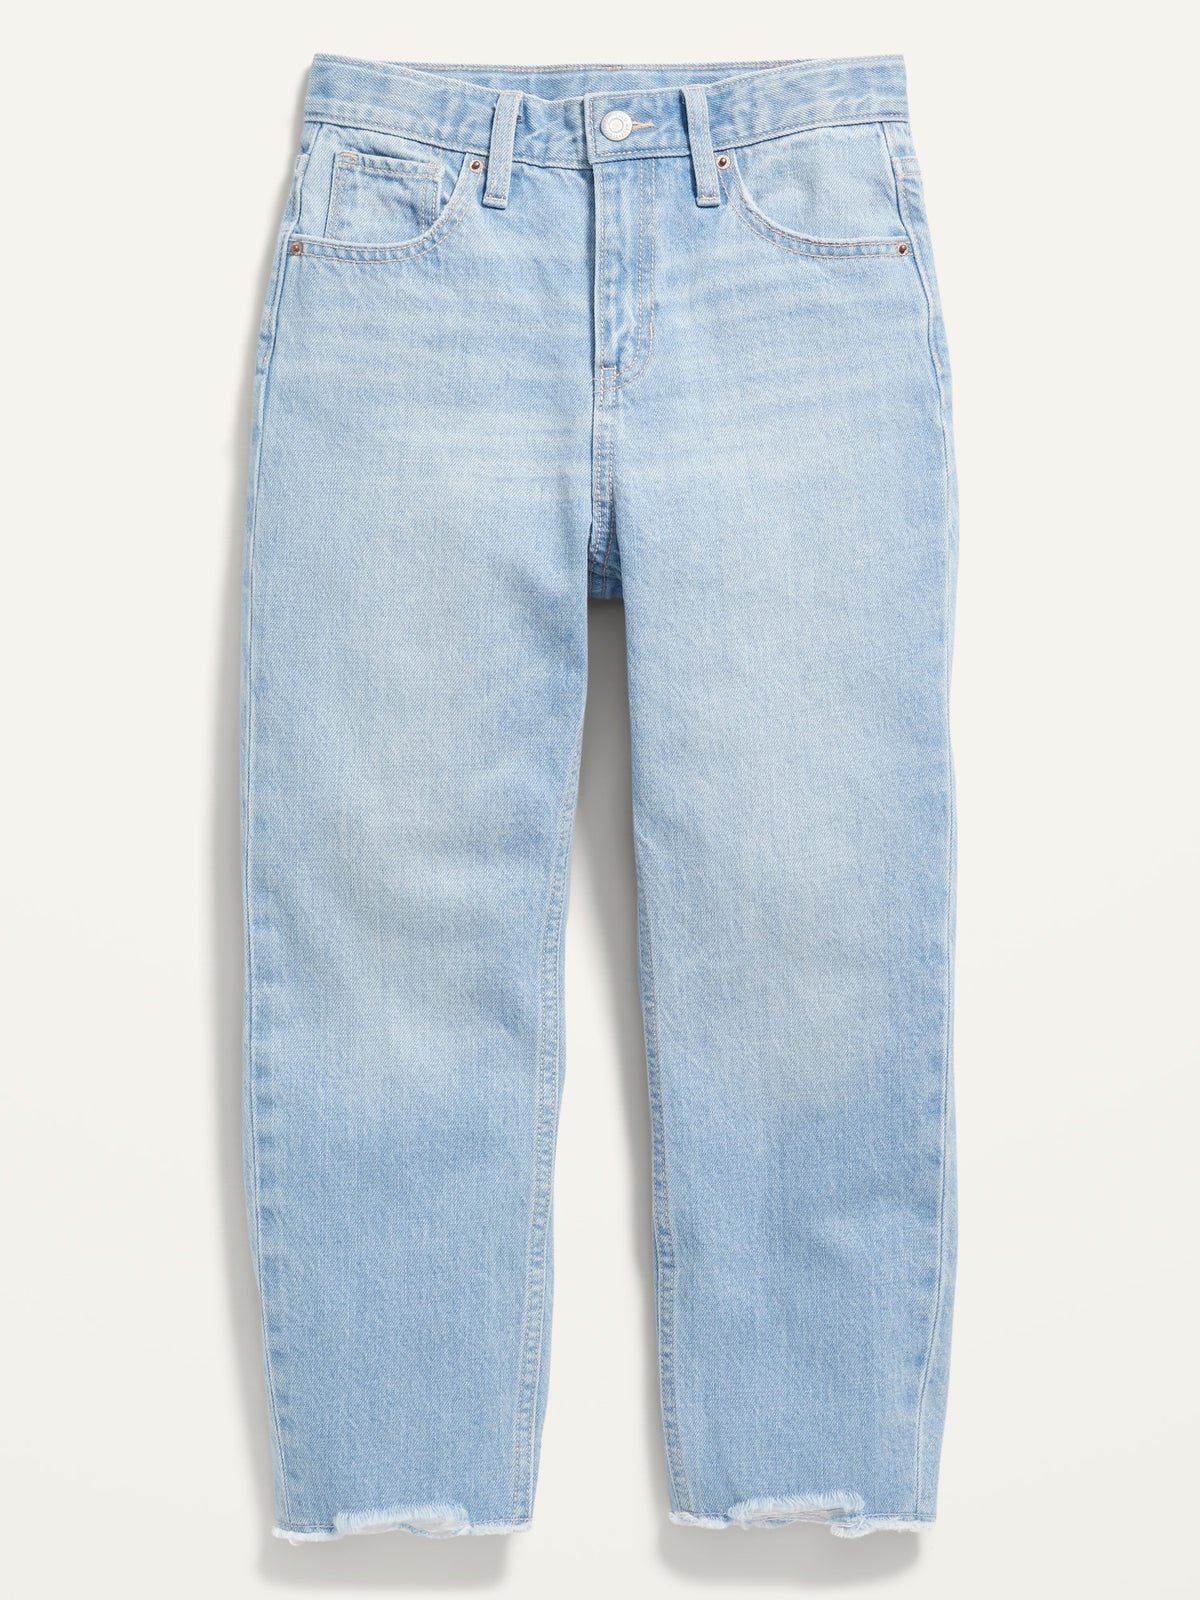 High-Waisted Slouchy Straight Frayed-Hem Non-Stretch Jeans for Girls_SunnyDays_1850.jpeg